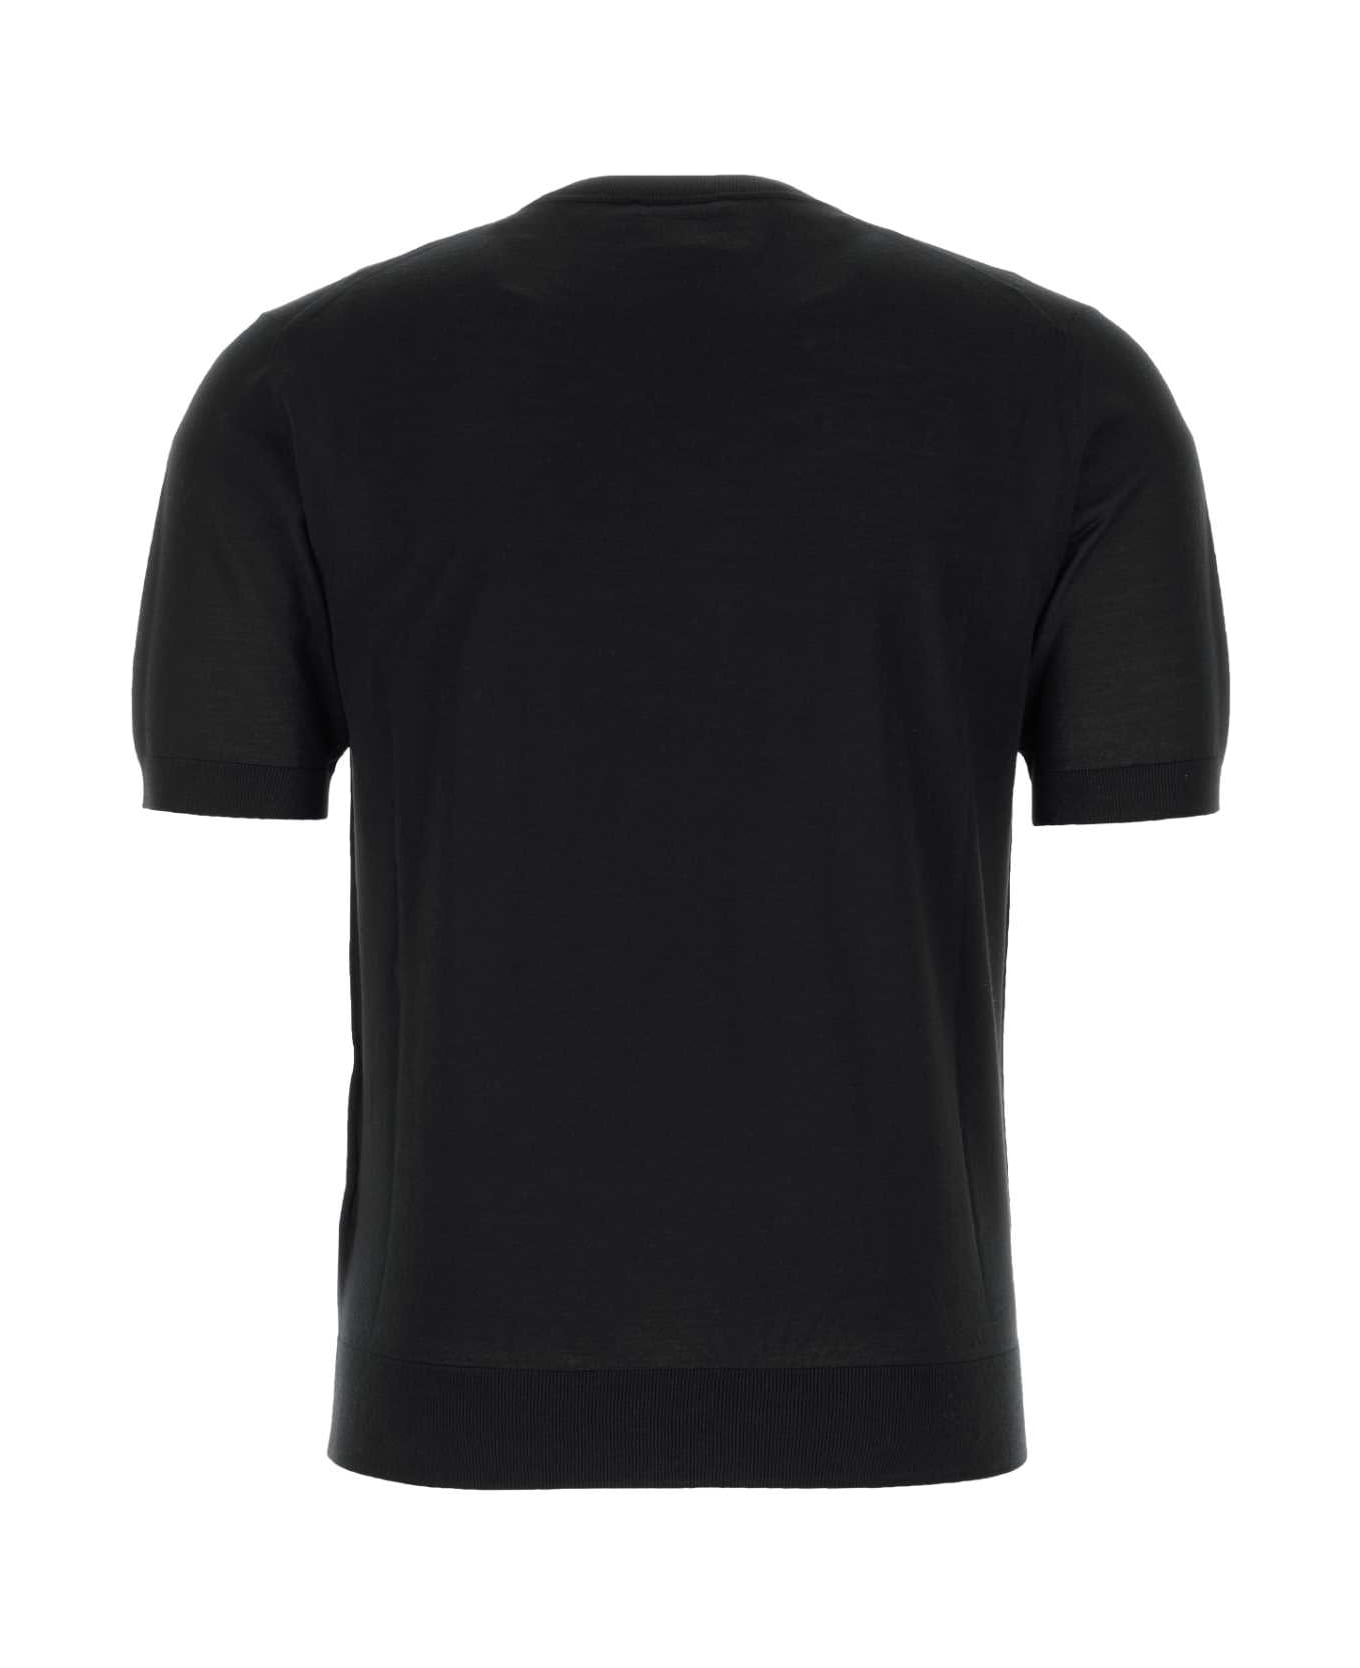 Prada Black Wool T-shirt - F0002